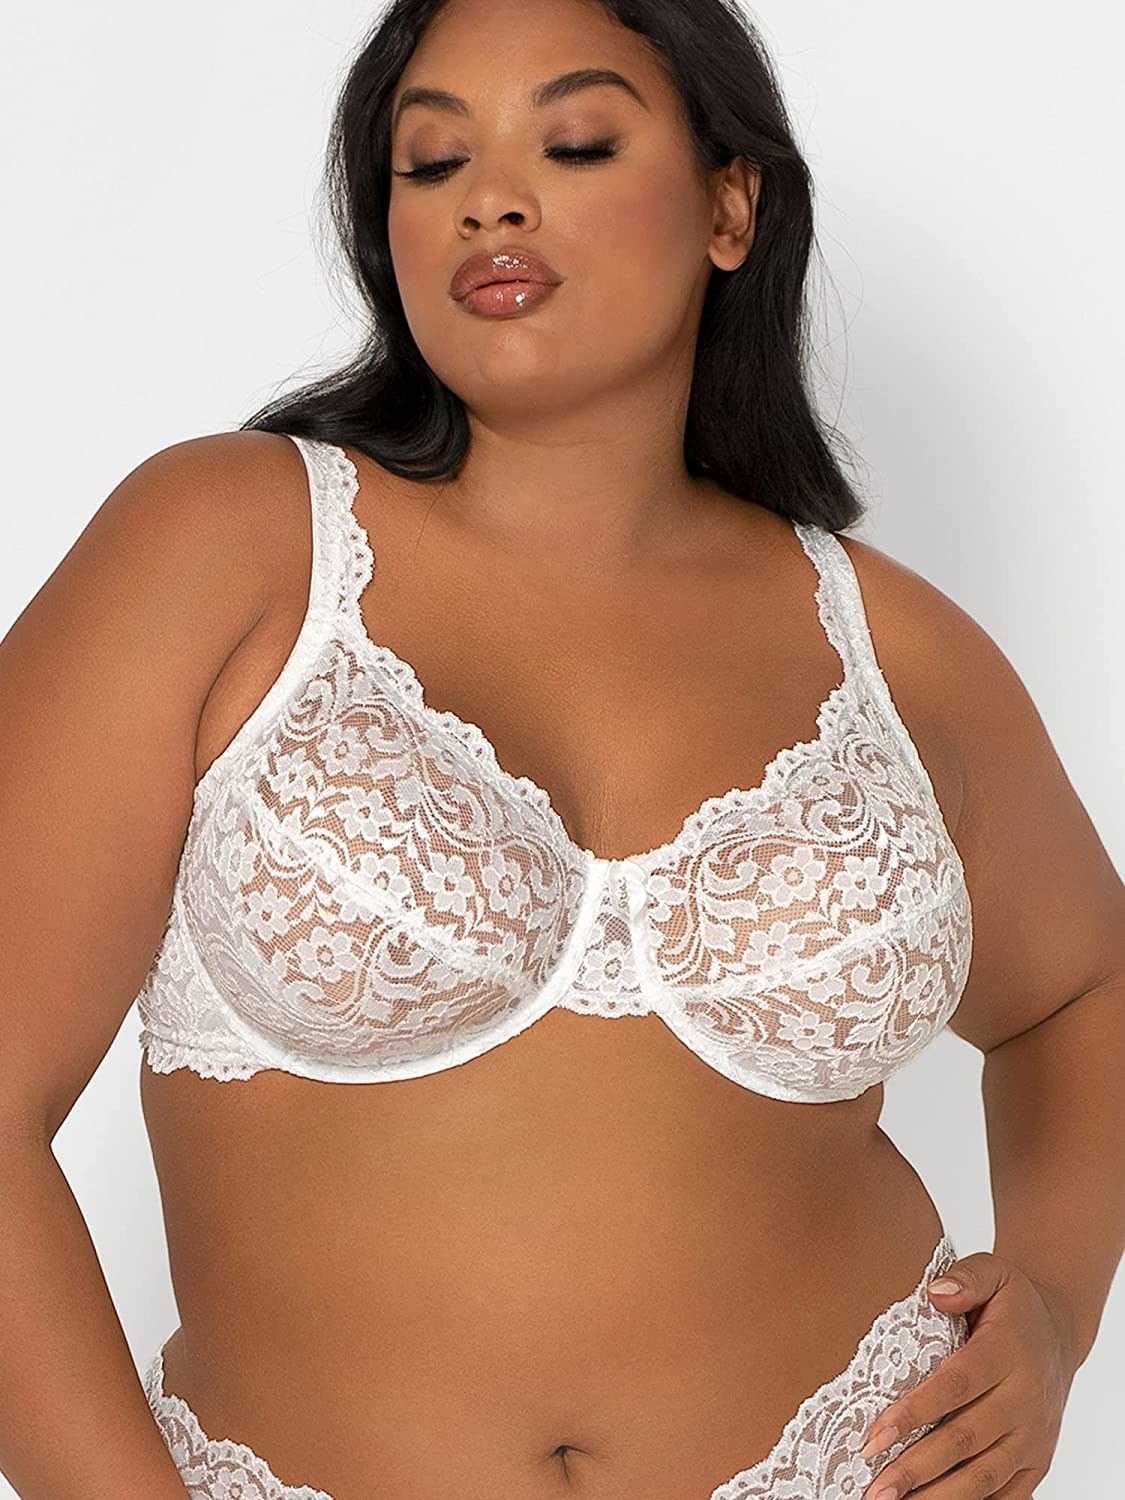 Model wearing white bra